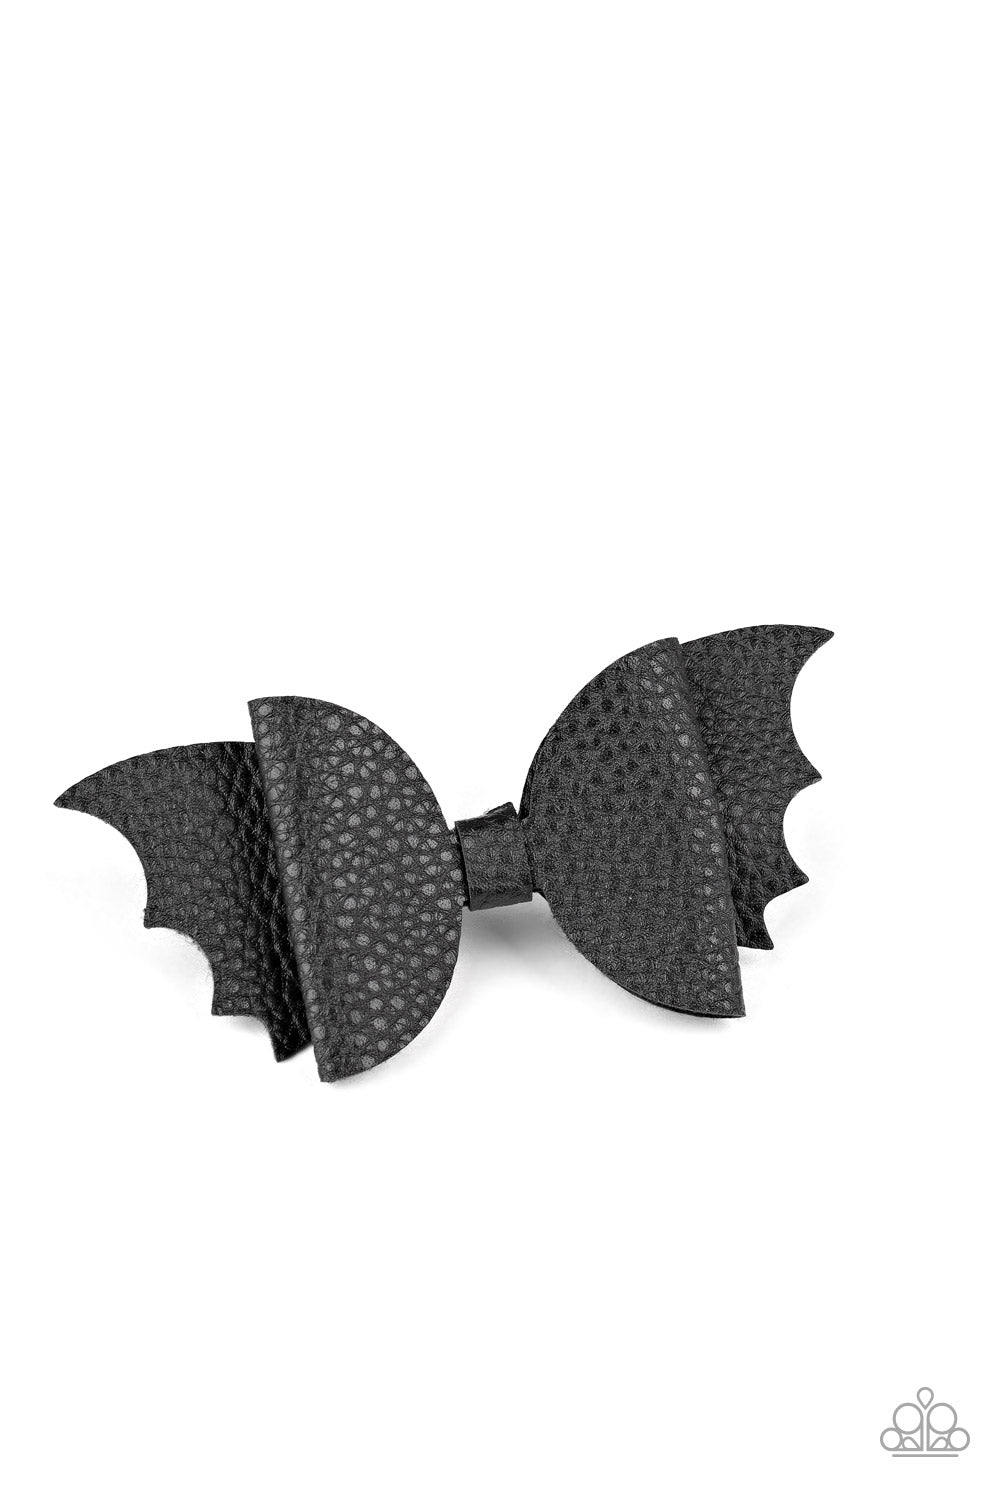 Drive Them Batty! - Black Hair Clip